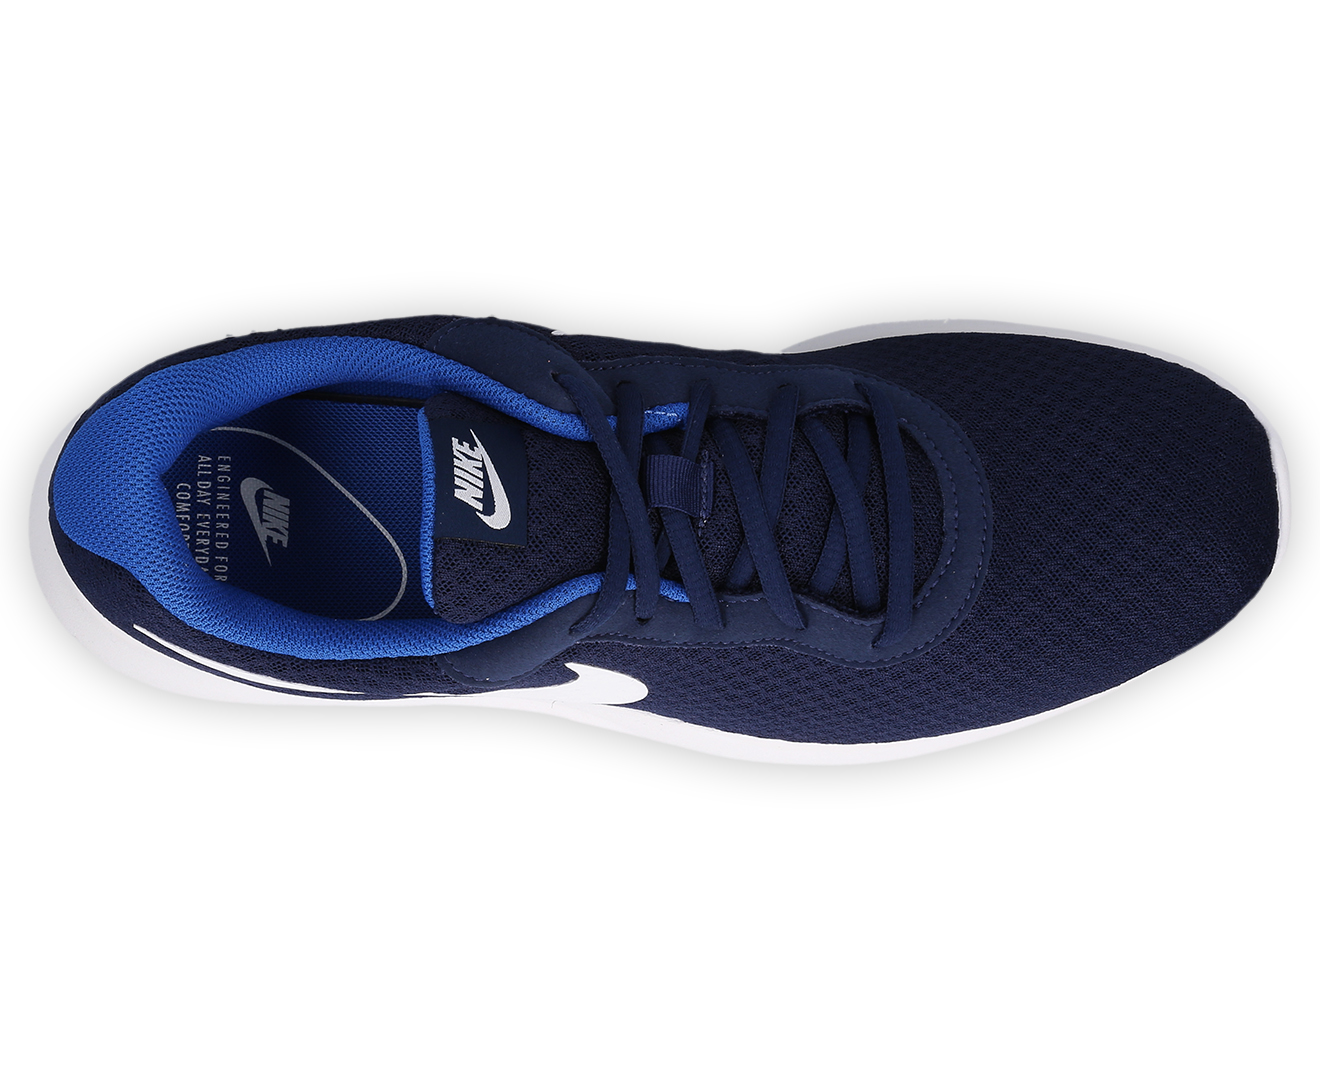 Nike Men's Tanjun Shoe - Midnight Navy/White-Game Royal | Catch.com.au